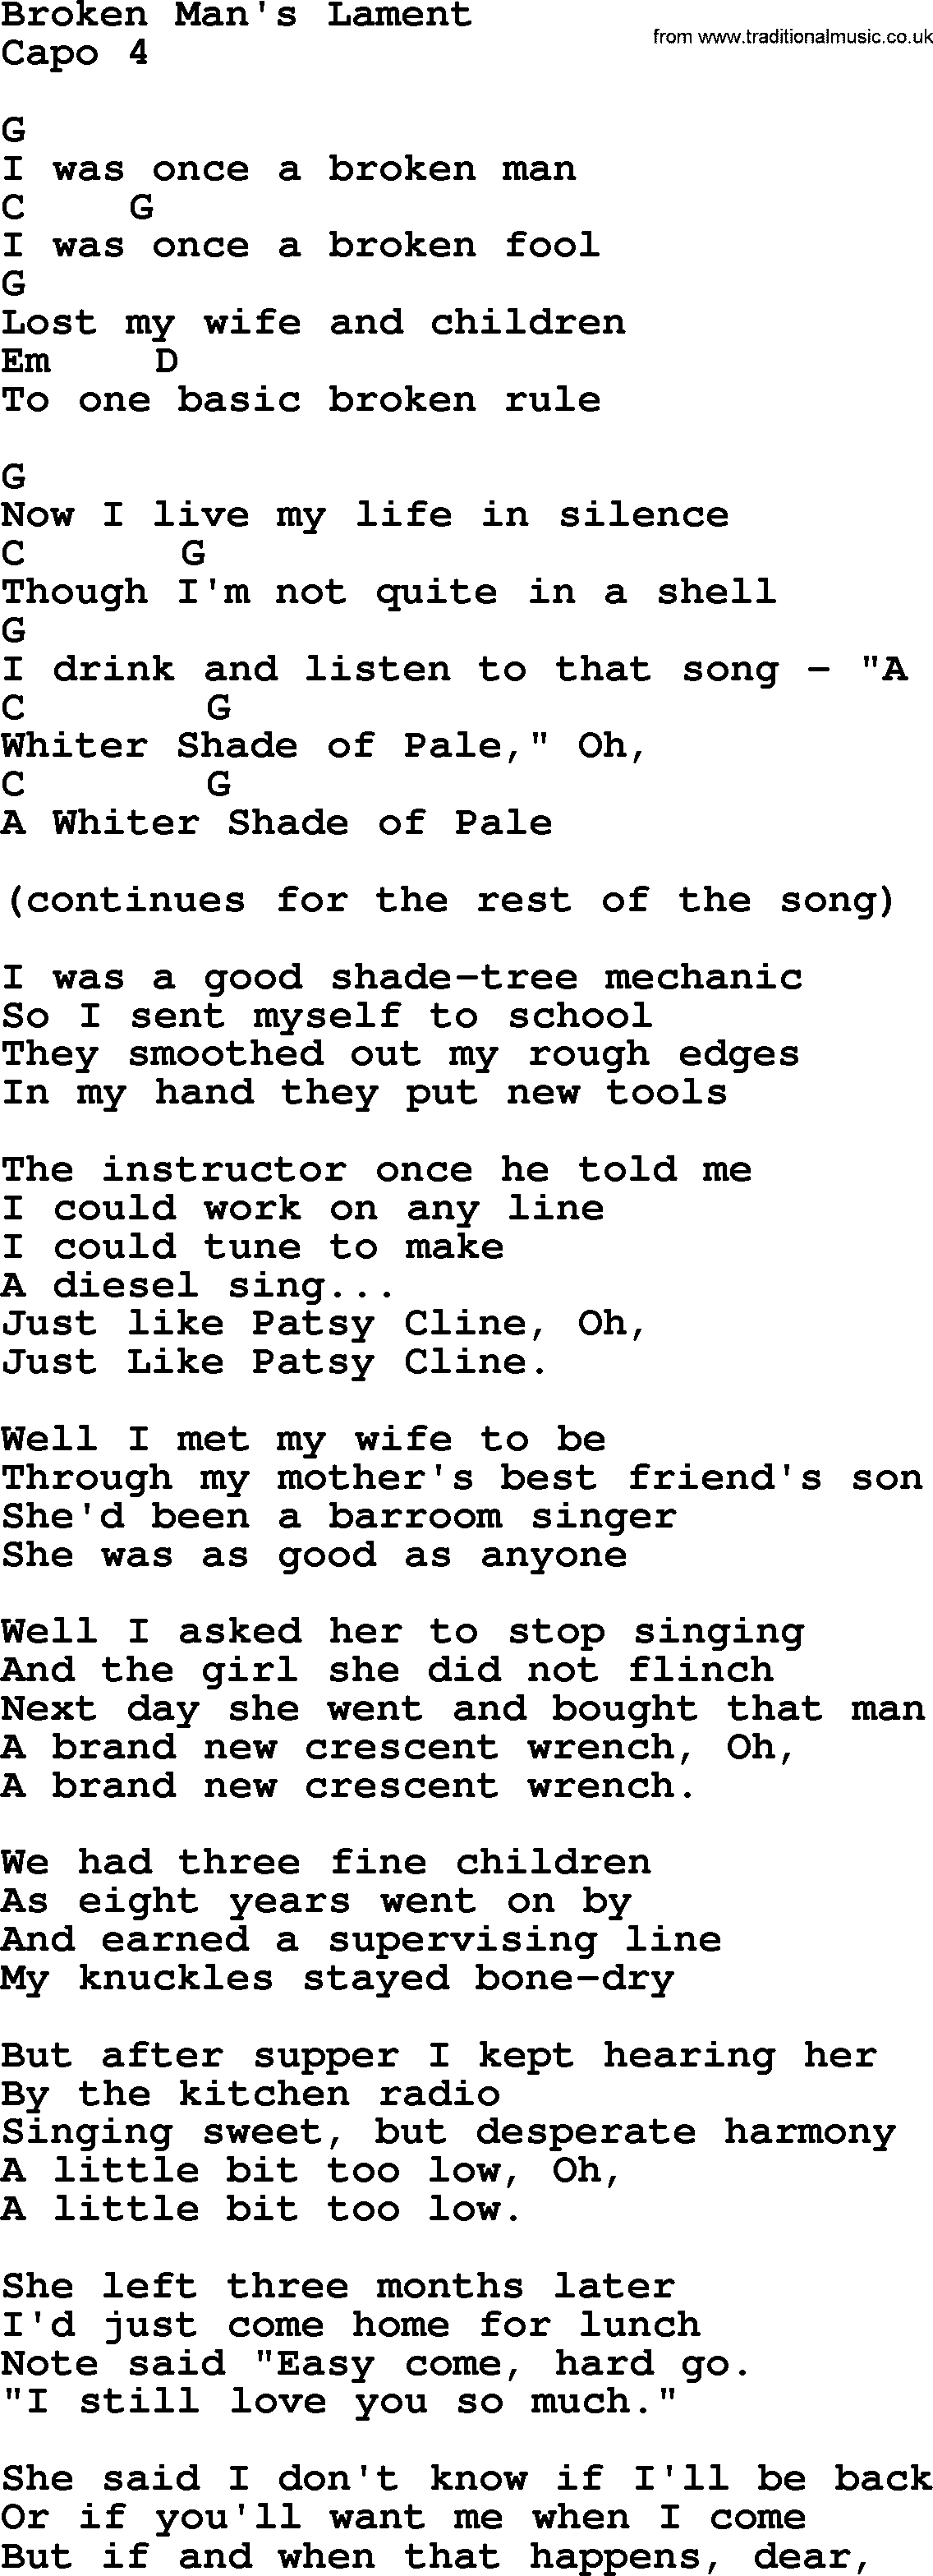 Emmylou Harris song: Broken Man's Lament lyrics and chords